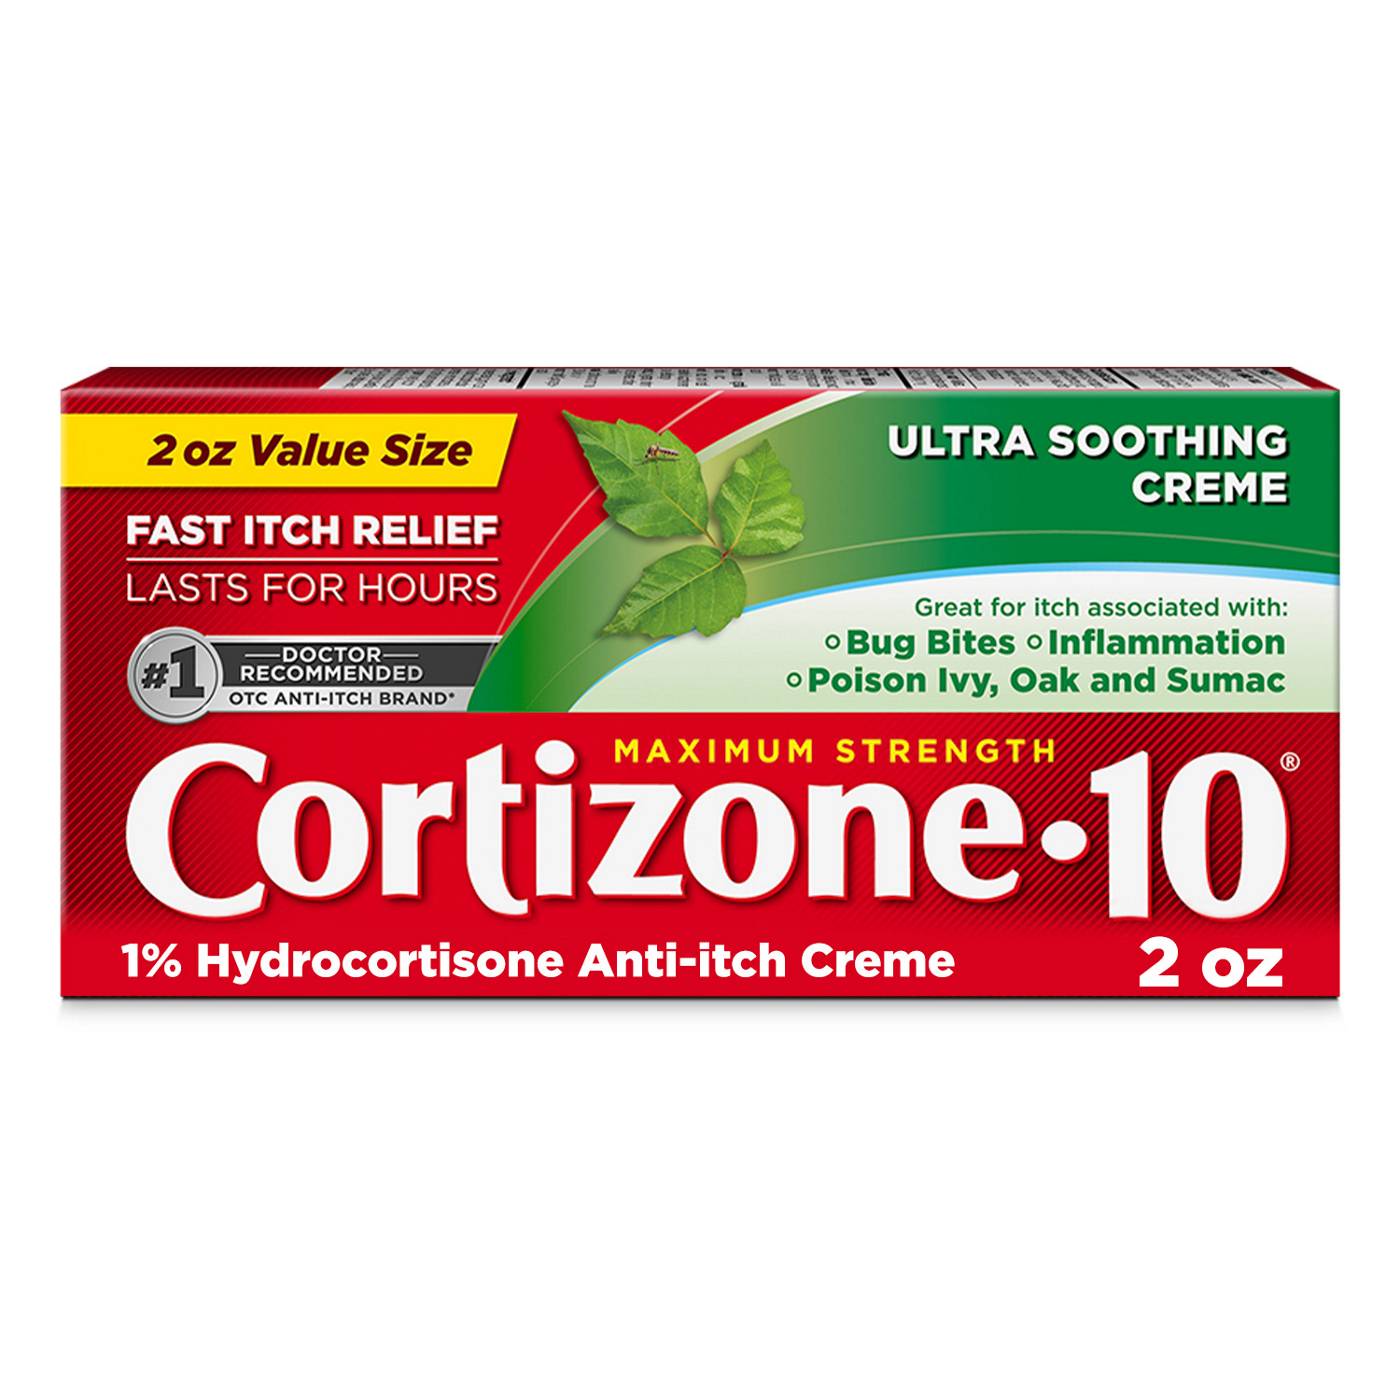 Cortizone 10 Maximum Strength Ultra Soothing Anti-Itch Cream; image 8 of 9